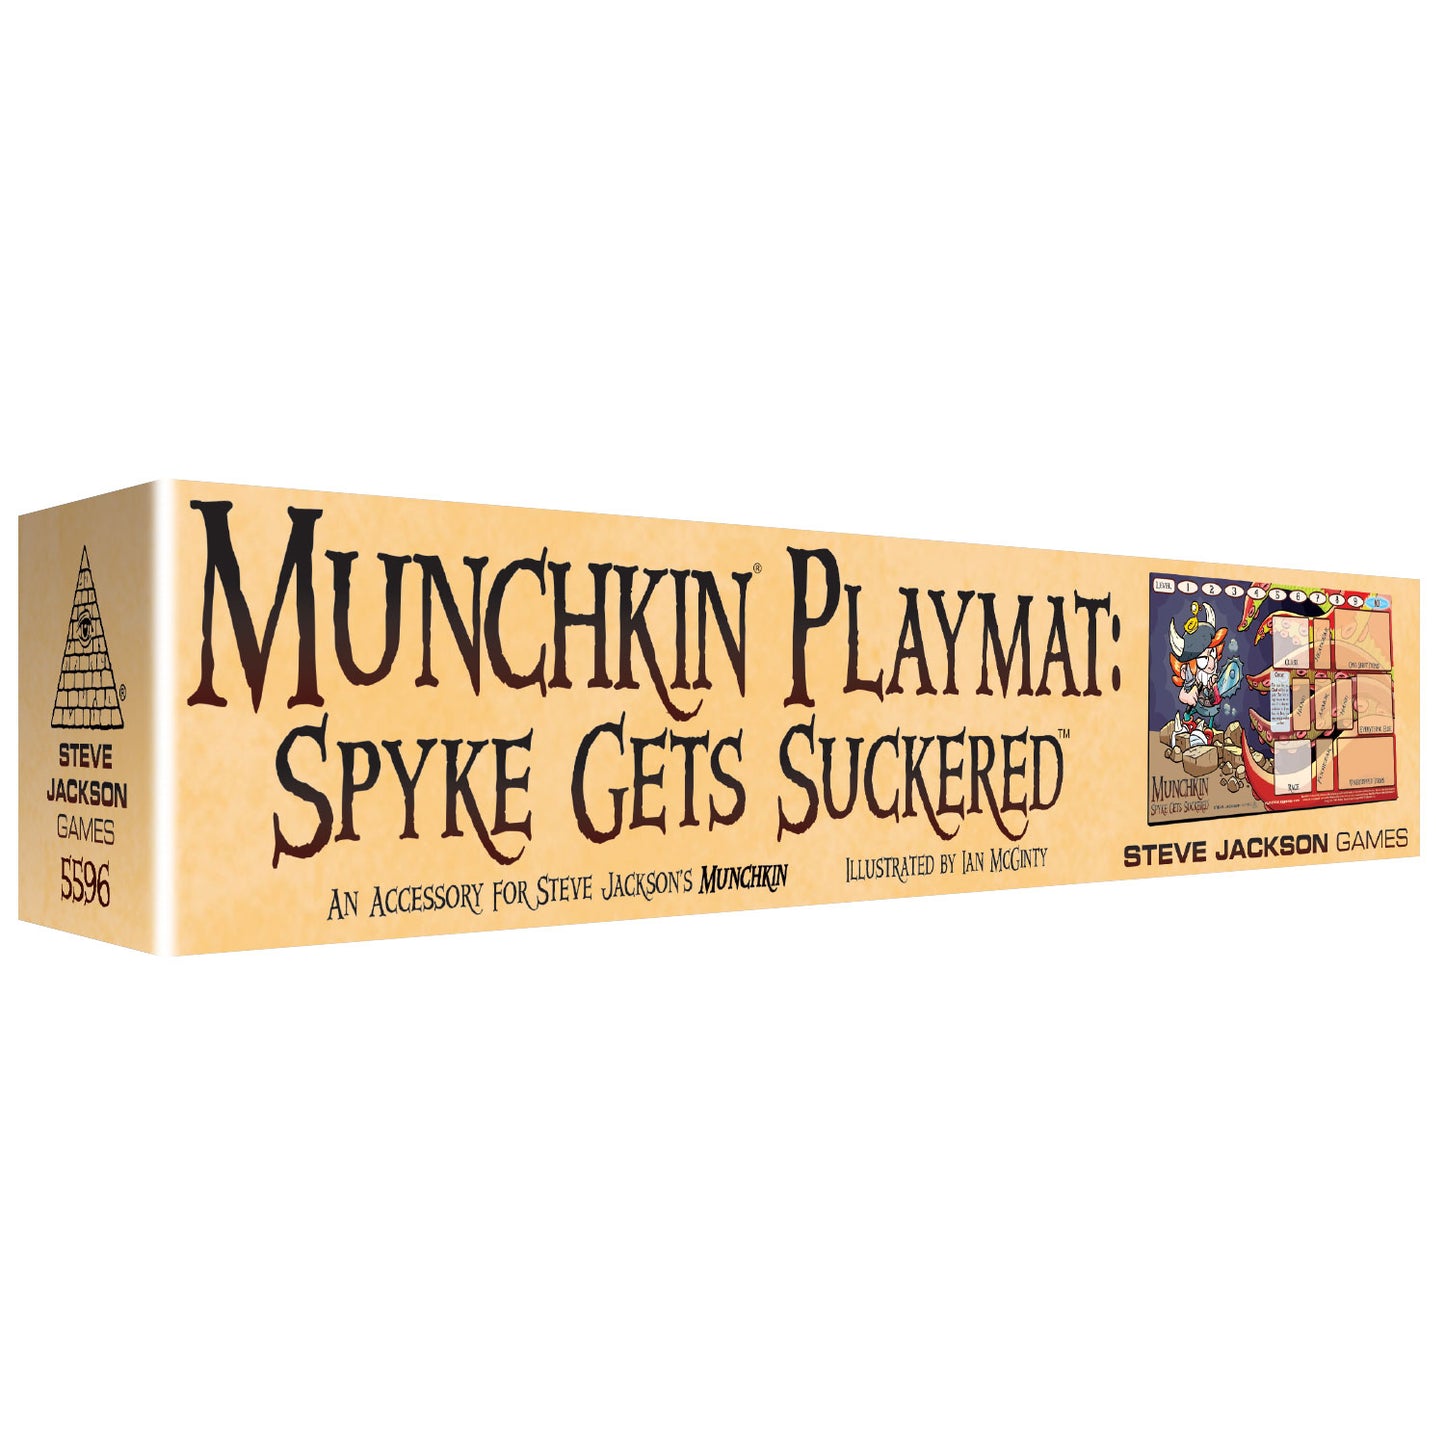 Munchkin Playmat: Spyke Gets Suckered